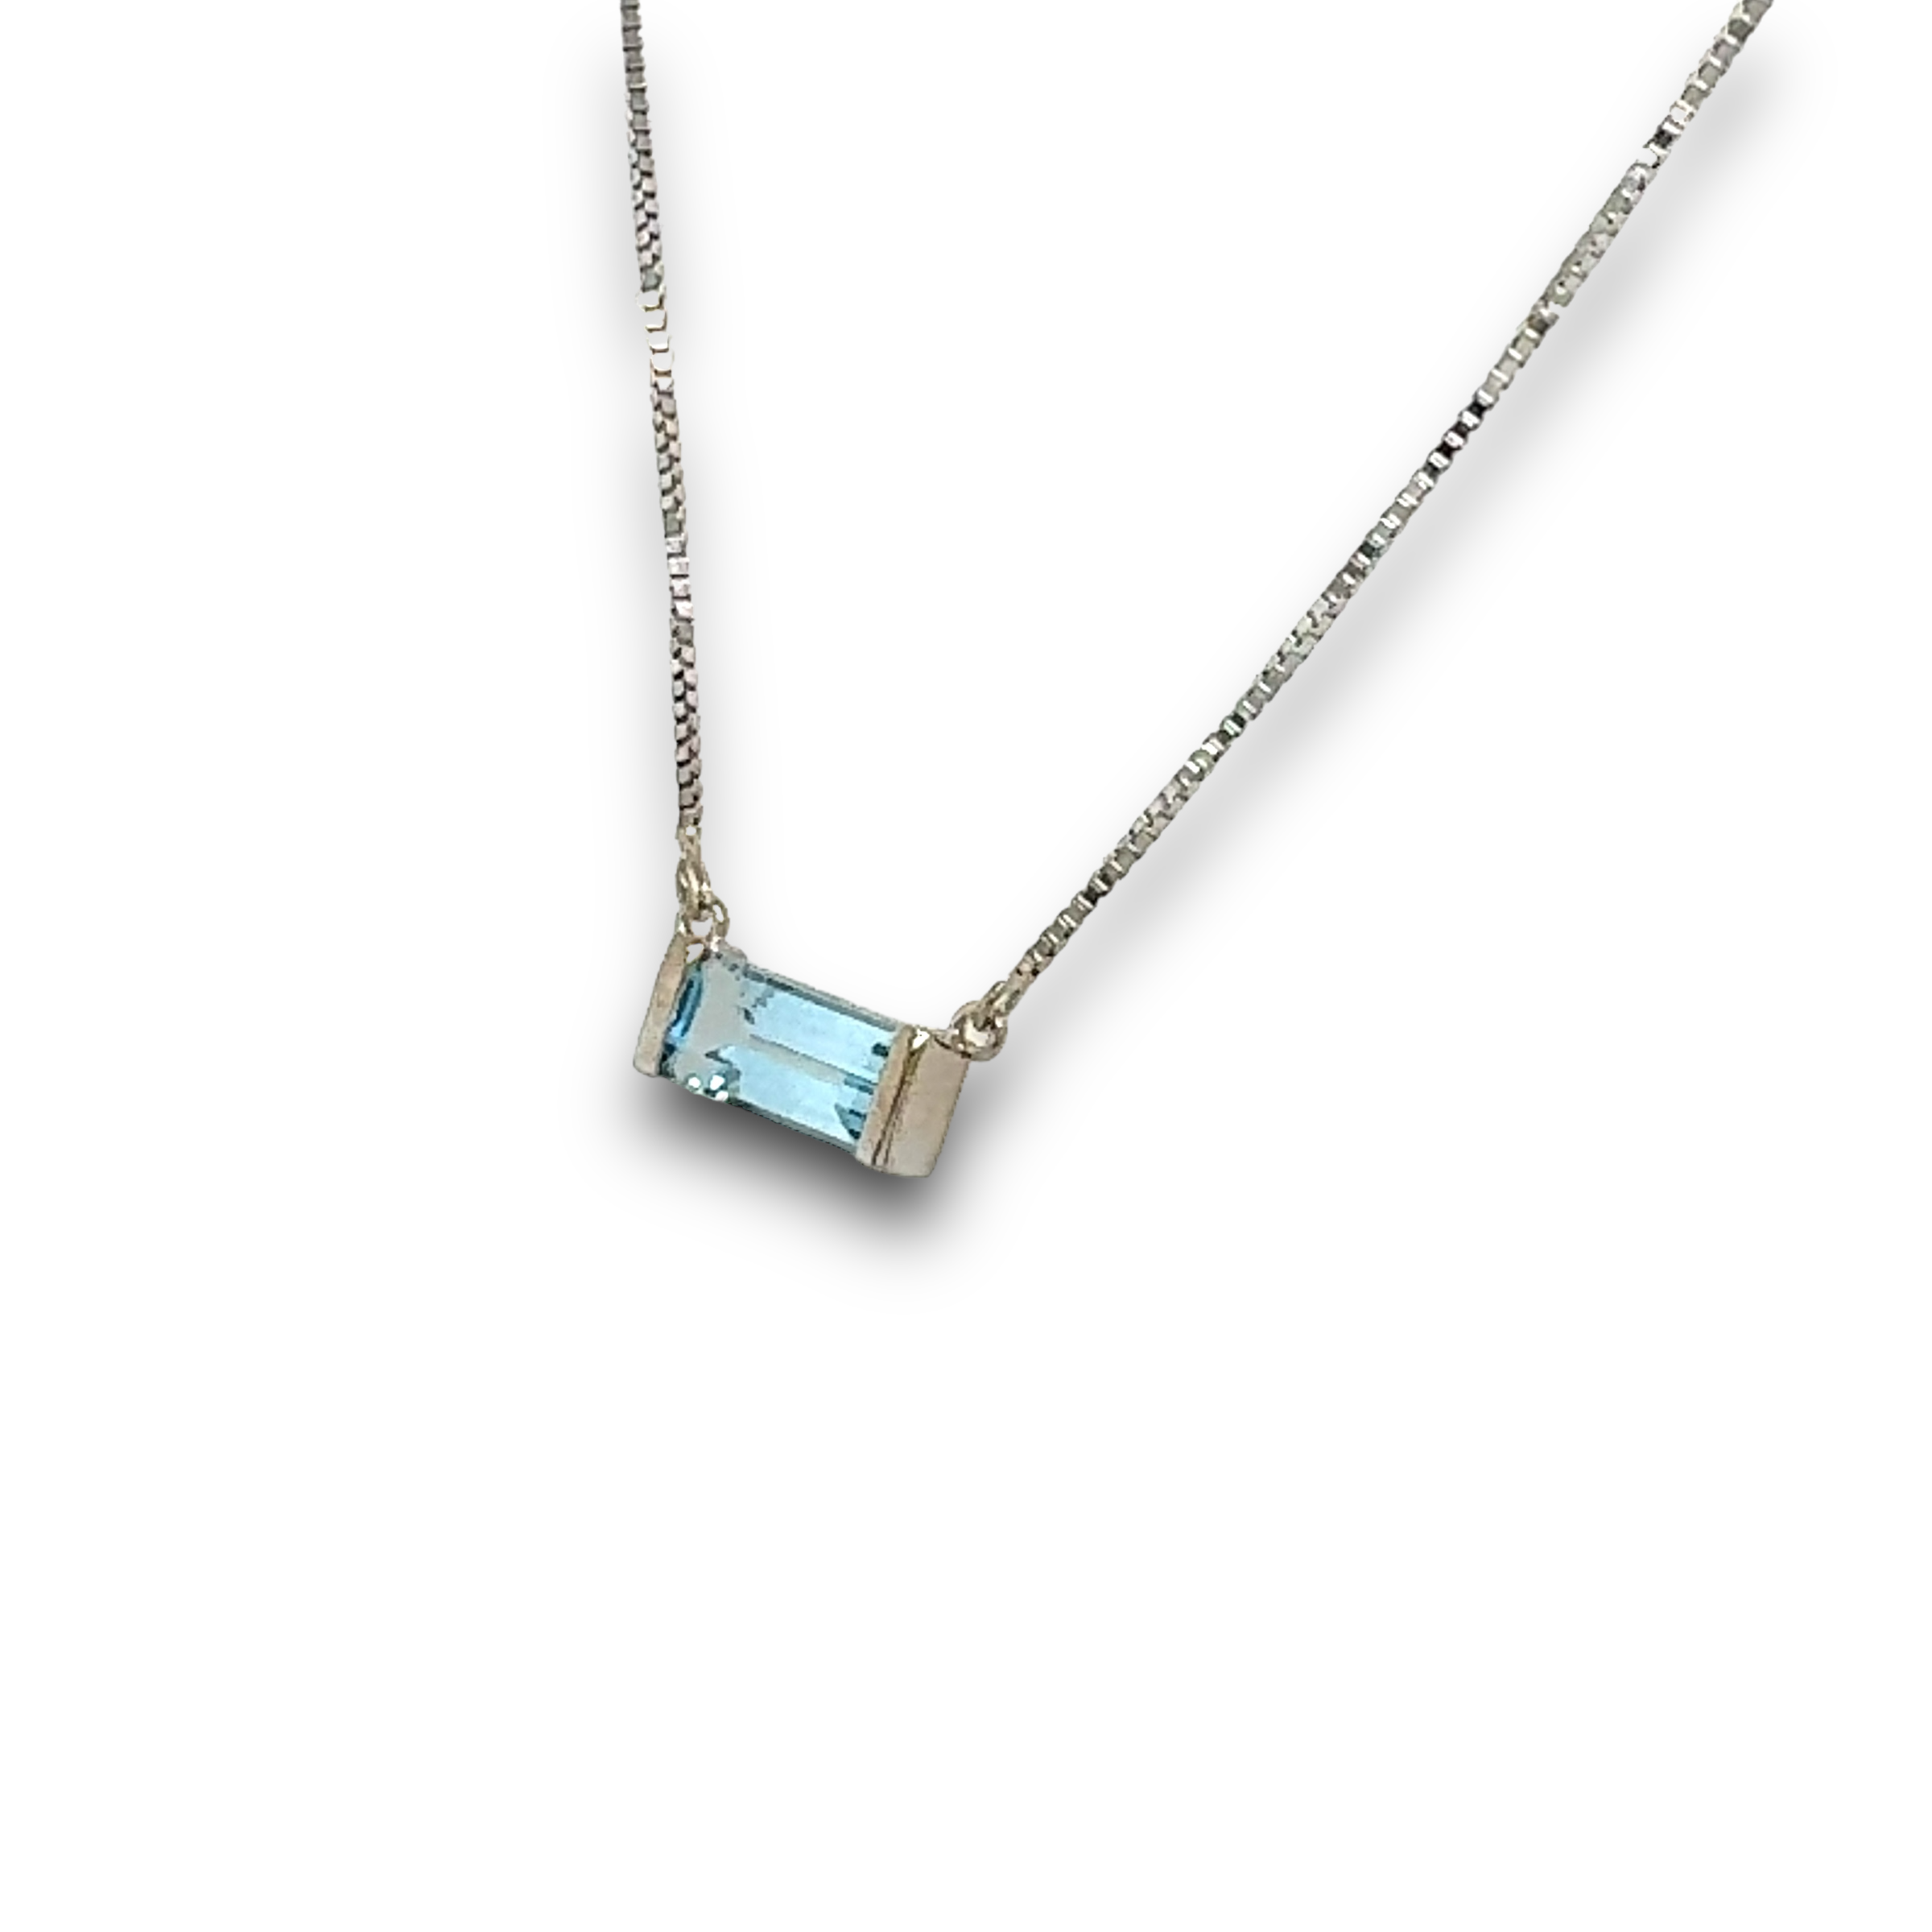 Blue Topaz Necklace in 14k White Gold